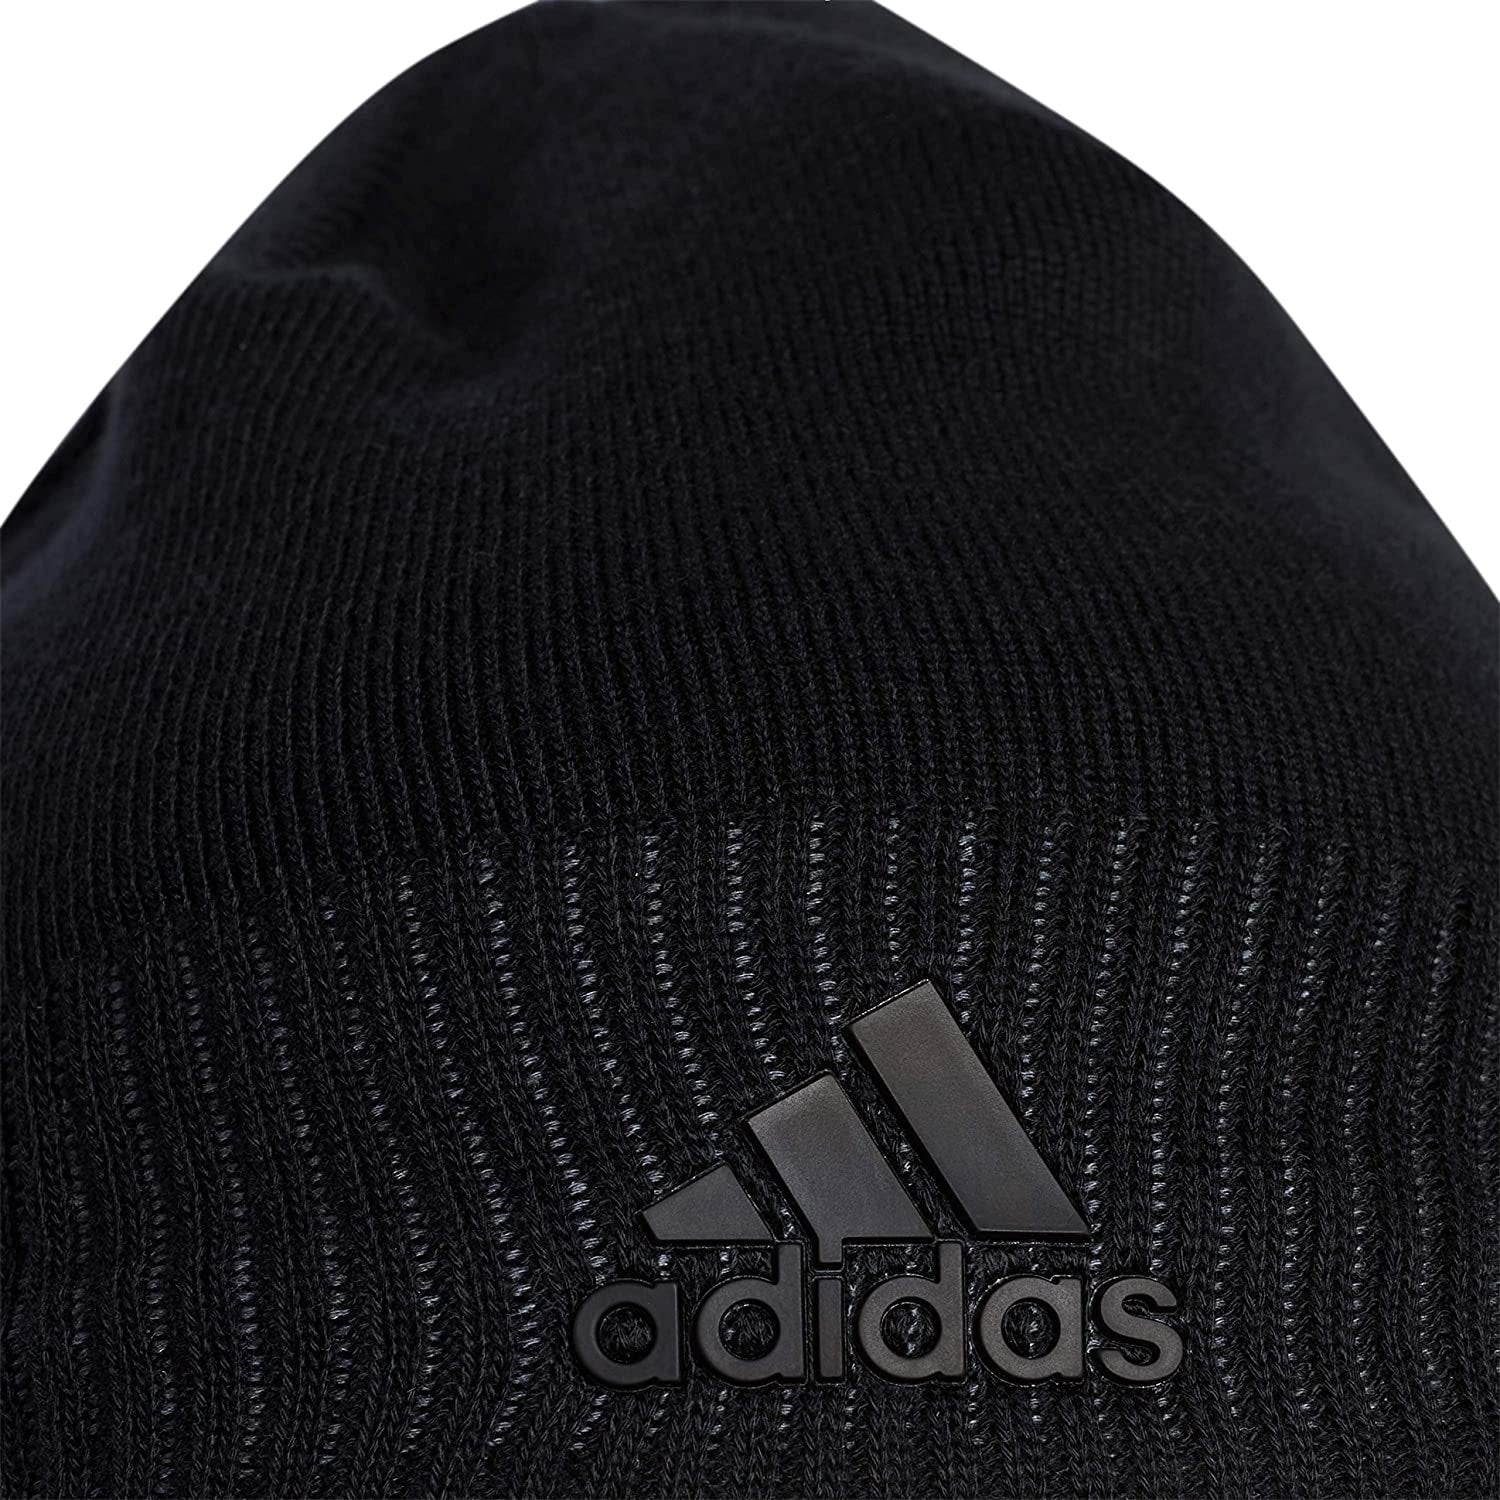 Adidas Creator 2 Black/Onix Men's Beanie - Becauze